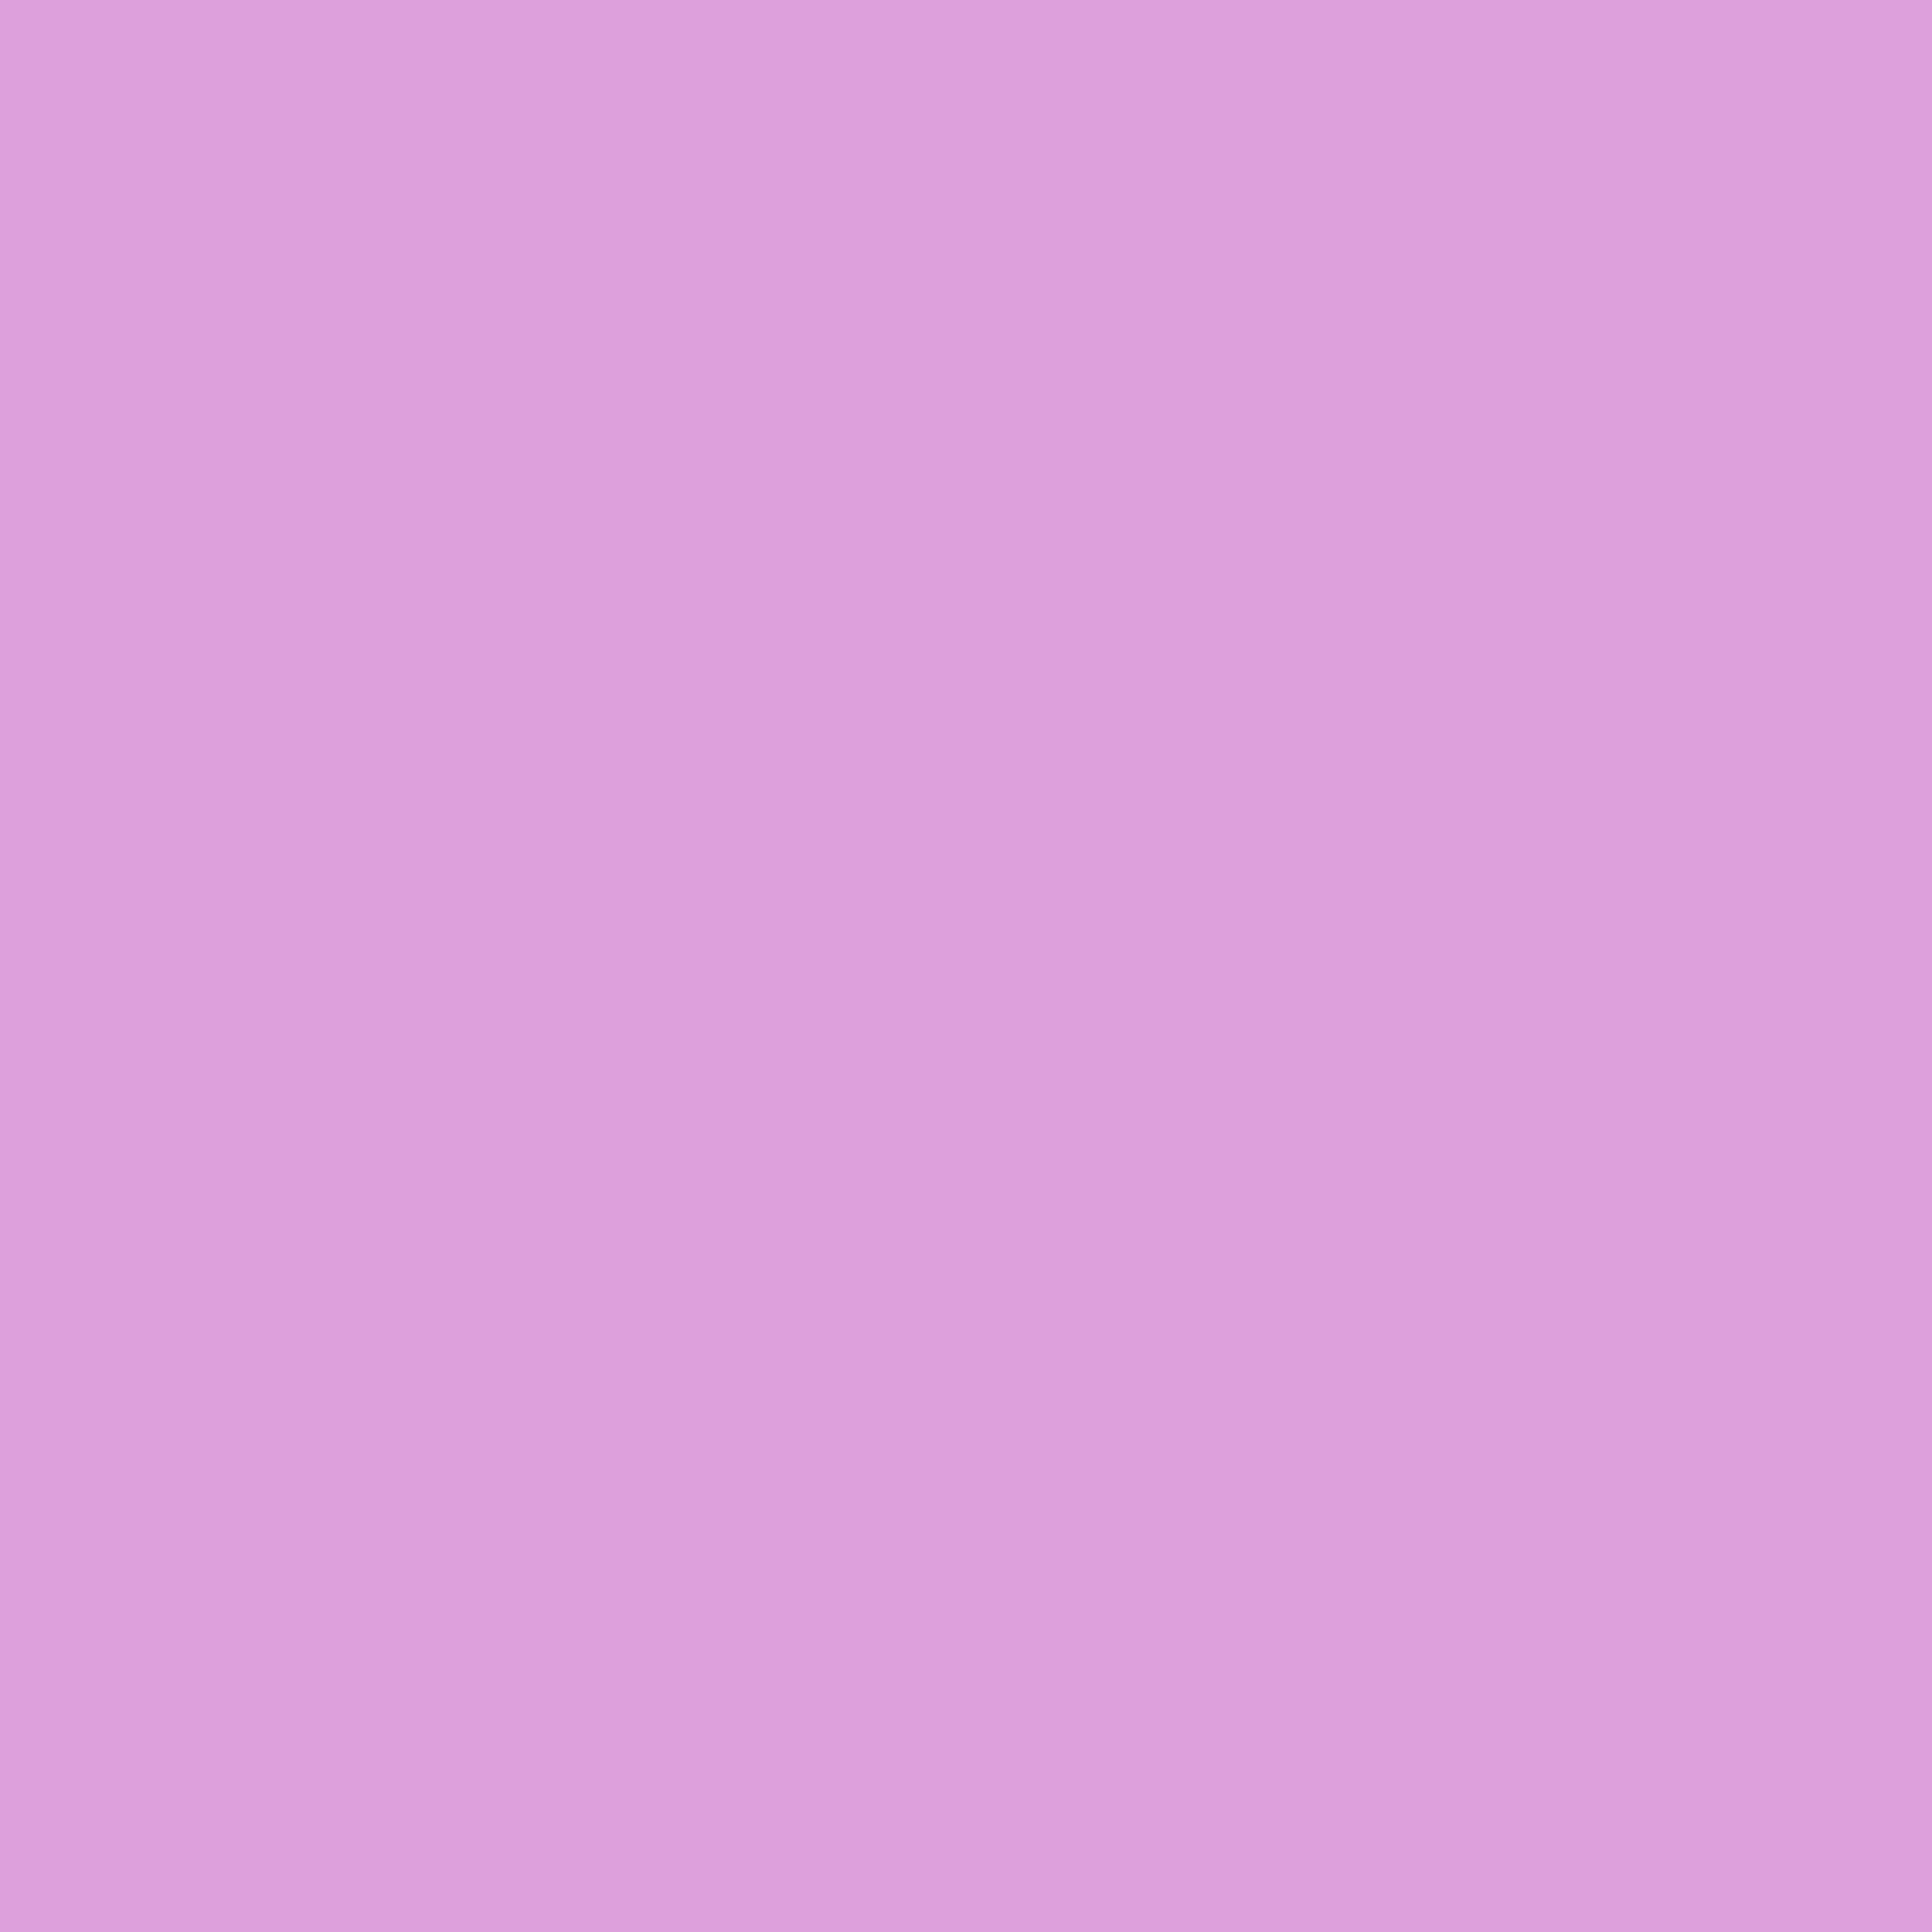 3600x3600 Medium Lavender Magenta Solid Color Background